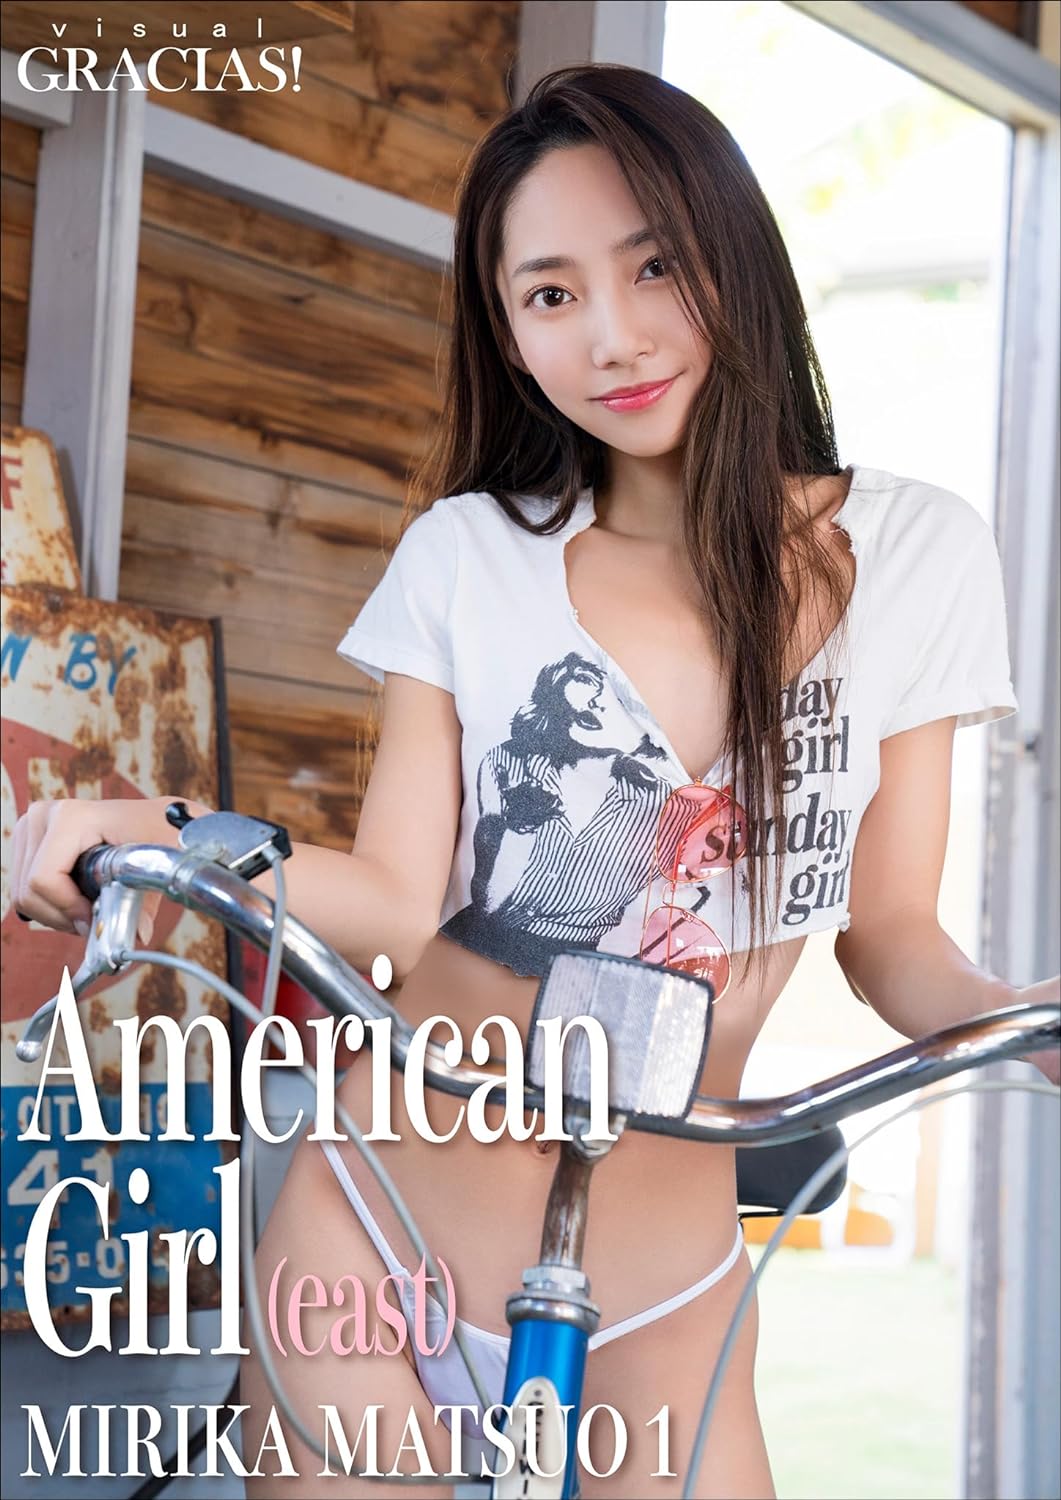 「American Girl（east）」MIRIKA MATSUO 1 visual GRACIAS! Kindle版のサンプル画像